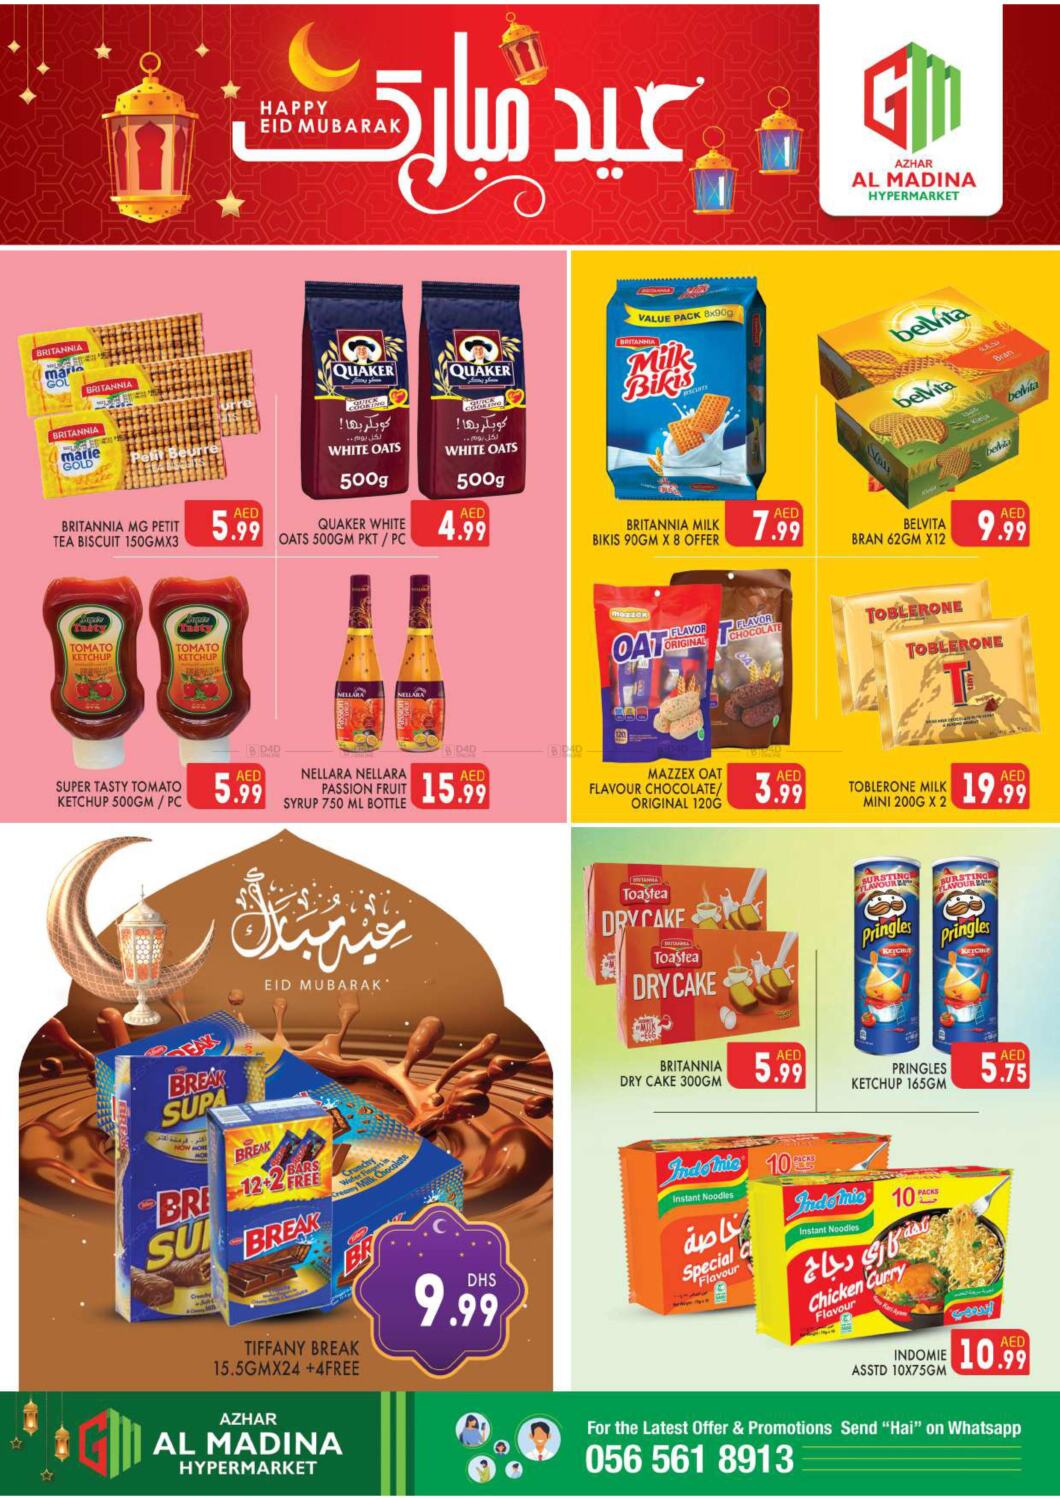 Monday Deals - Muhaisnah 4, Dubai from Al Madina Hypermarket until